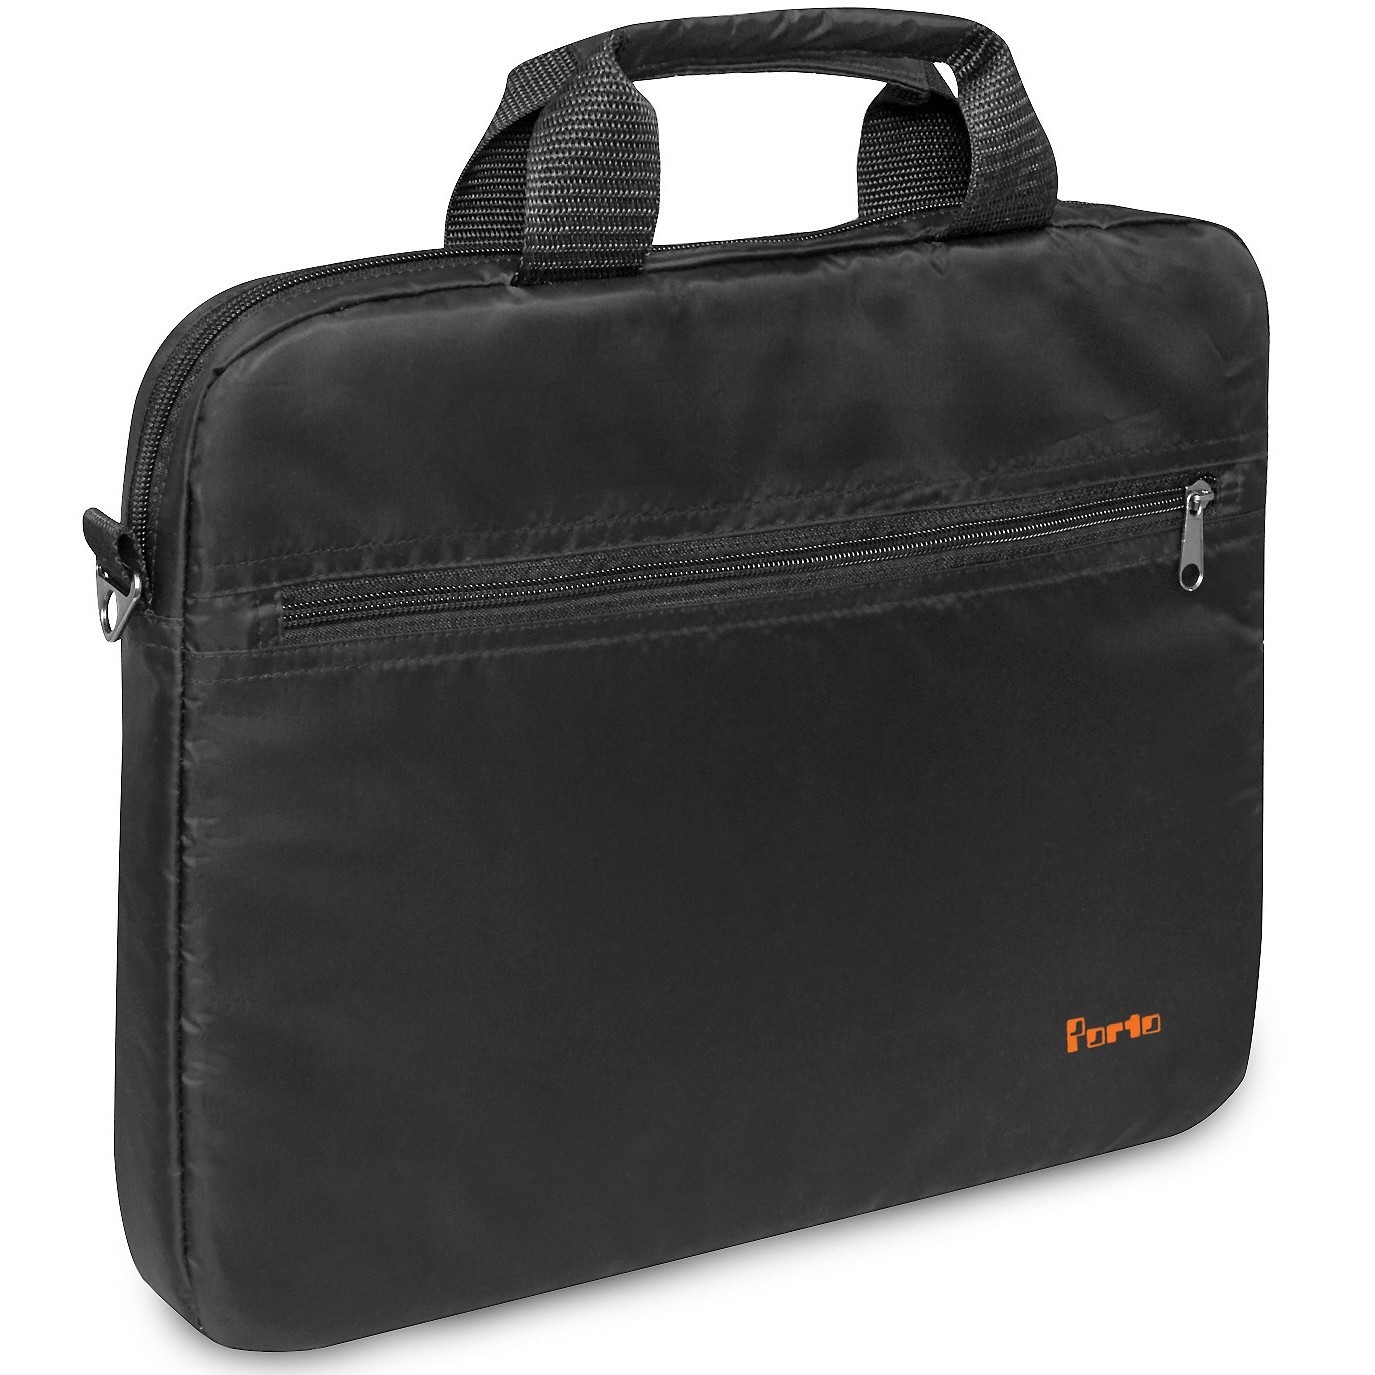 Ноутбук сумка Lenovo t210 Black. Pon-113bk. Сумка для ноутбука Porto. Defender 15.6